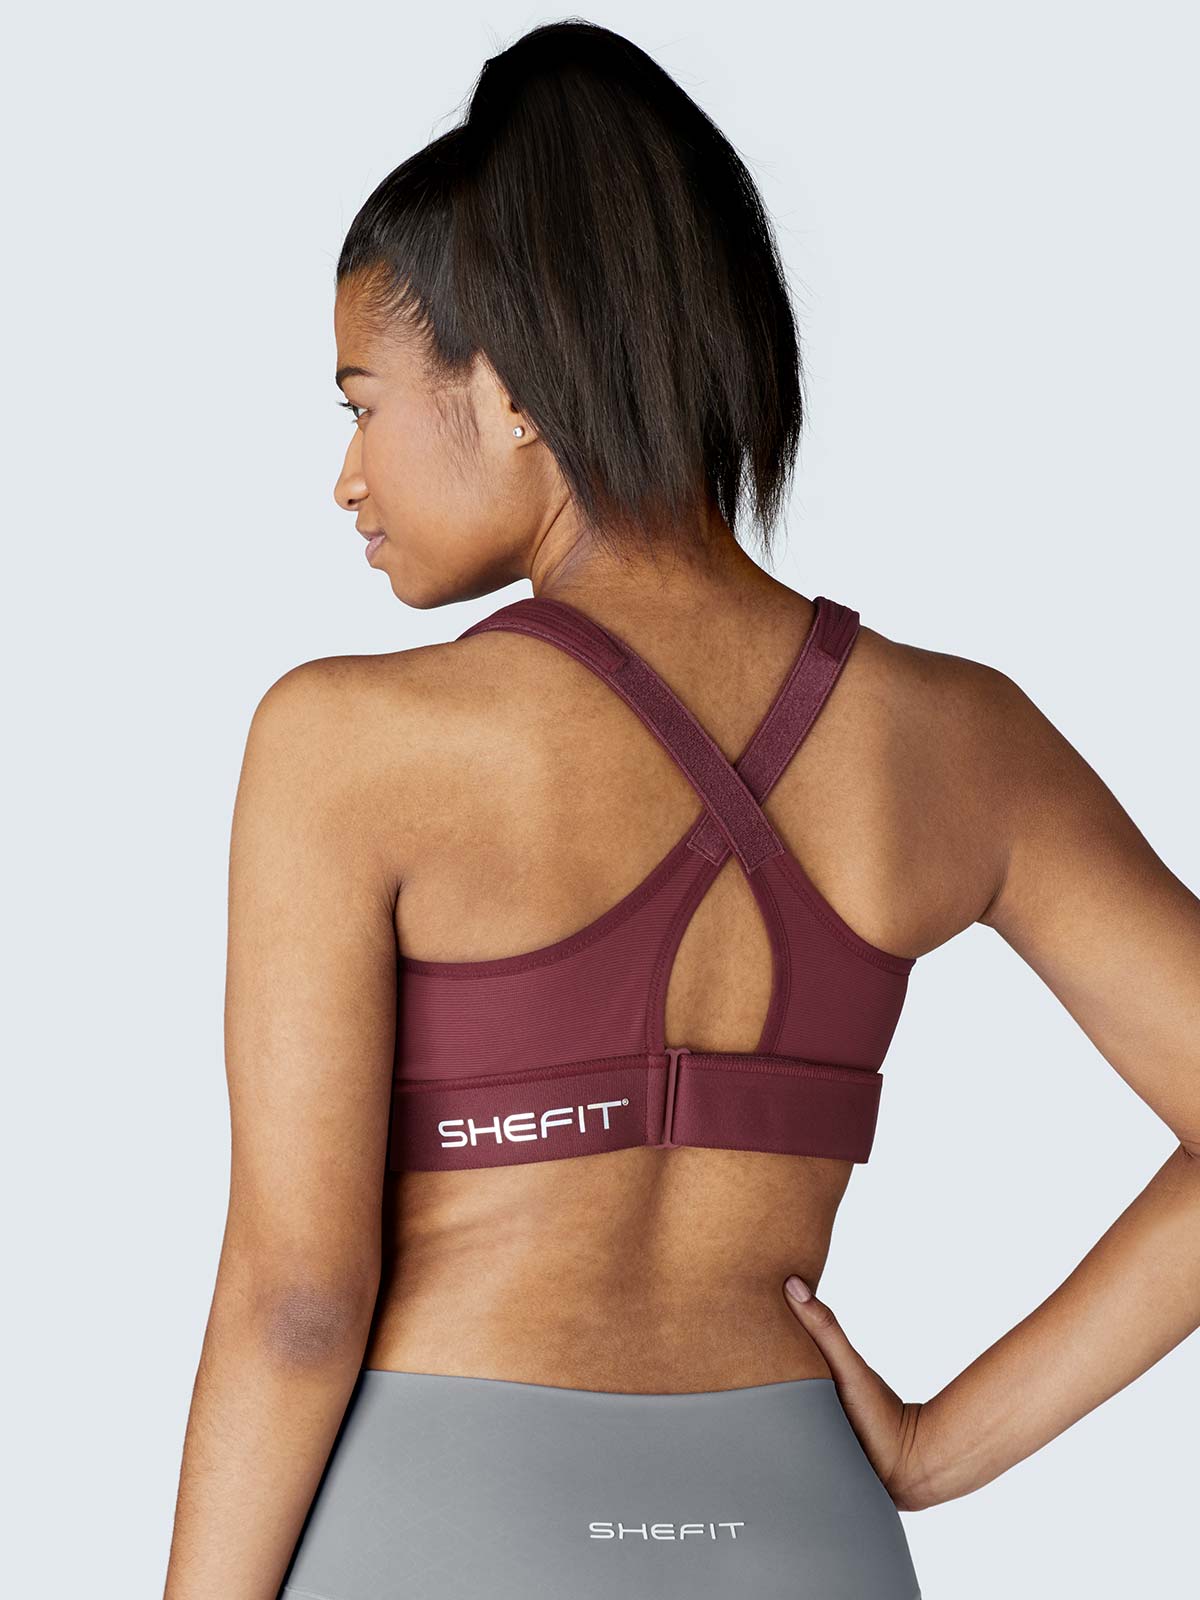  SHEFIT Ultimate Sports Bra For Women, High Impact Sports  Bra, Wine, 6X